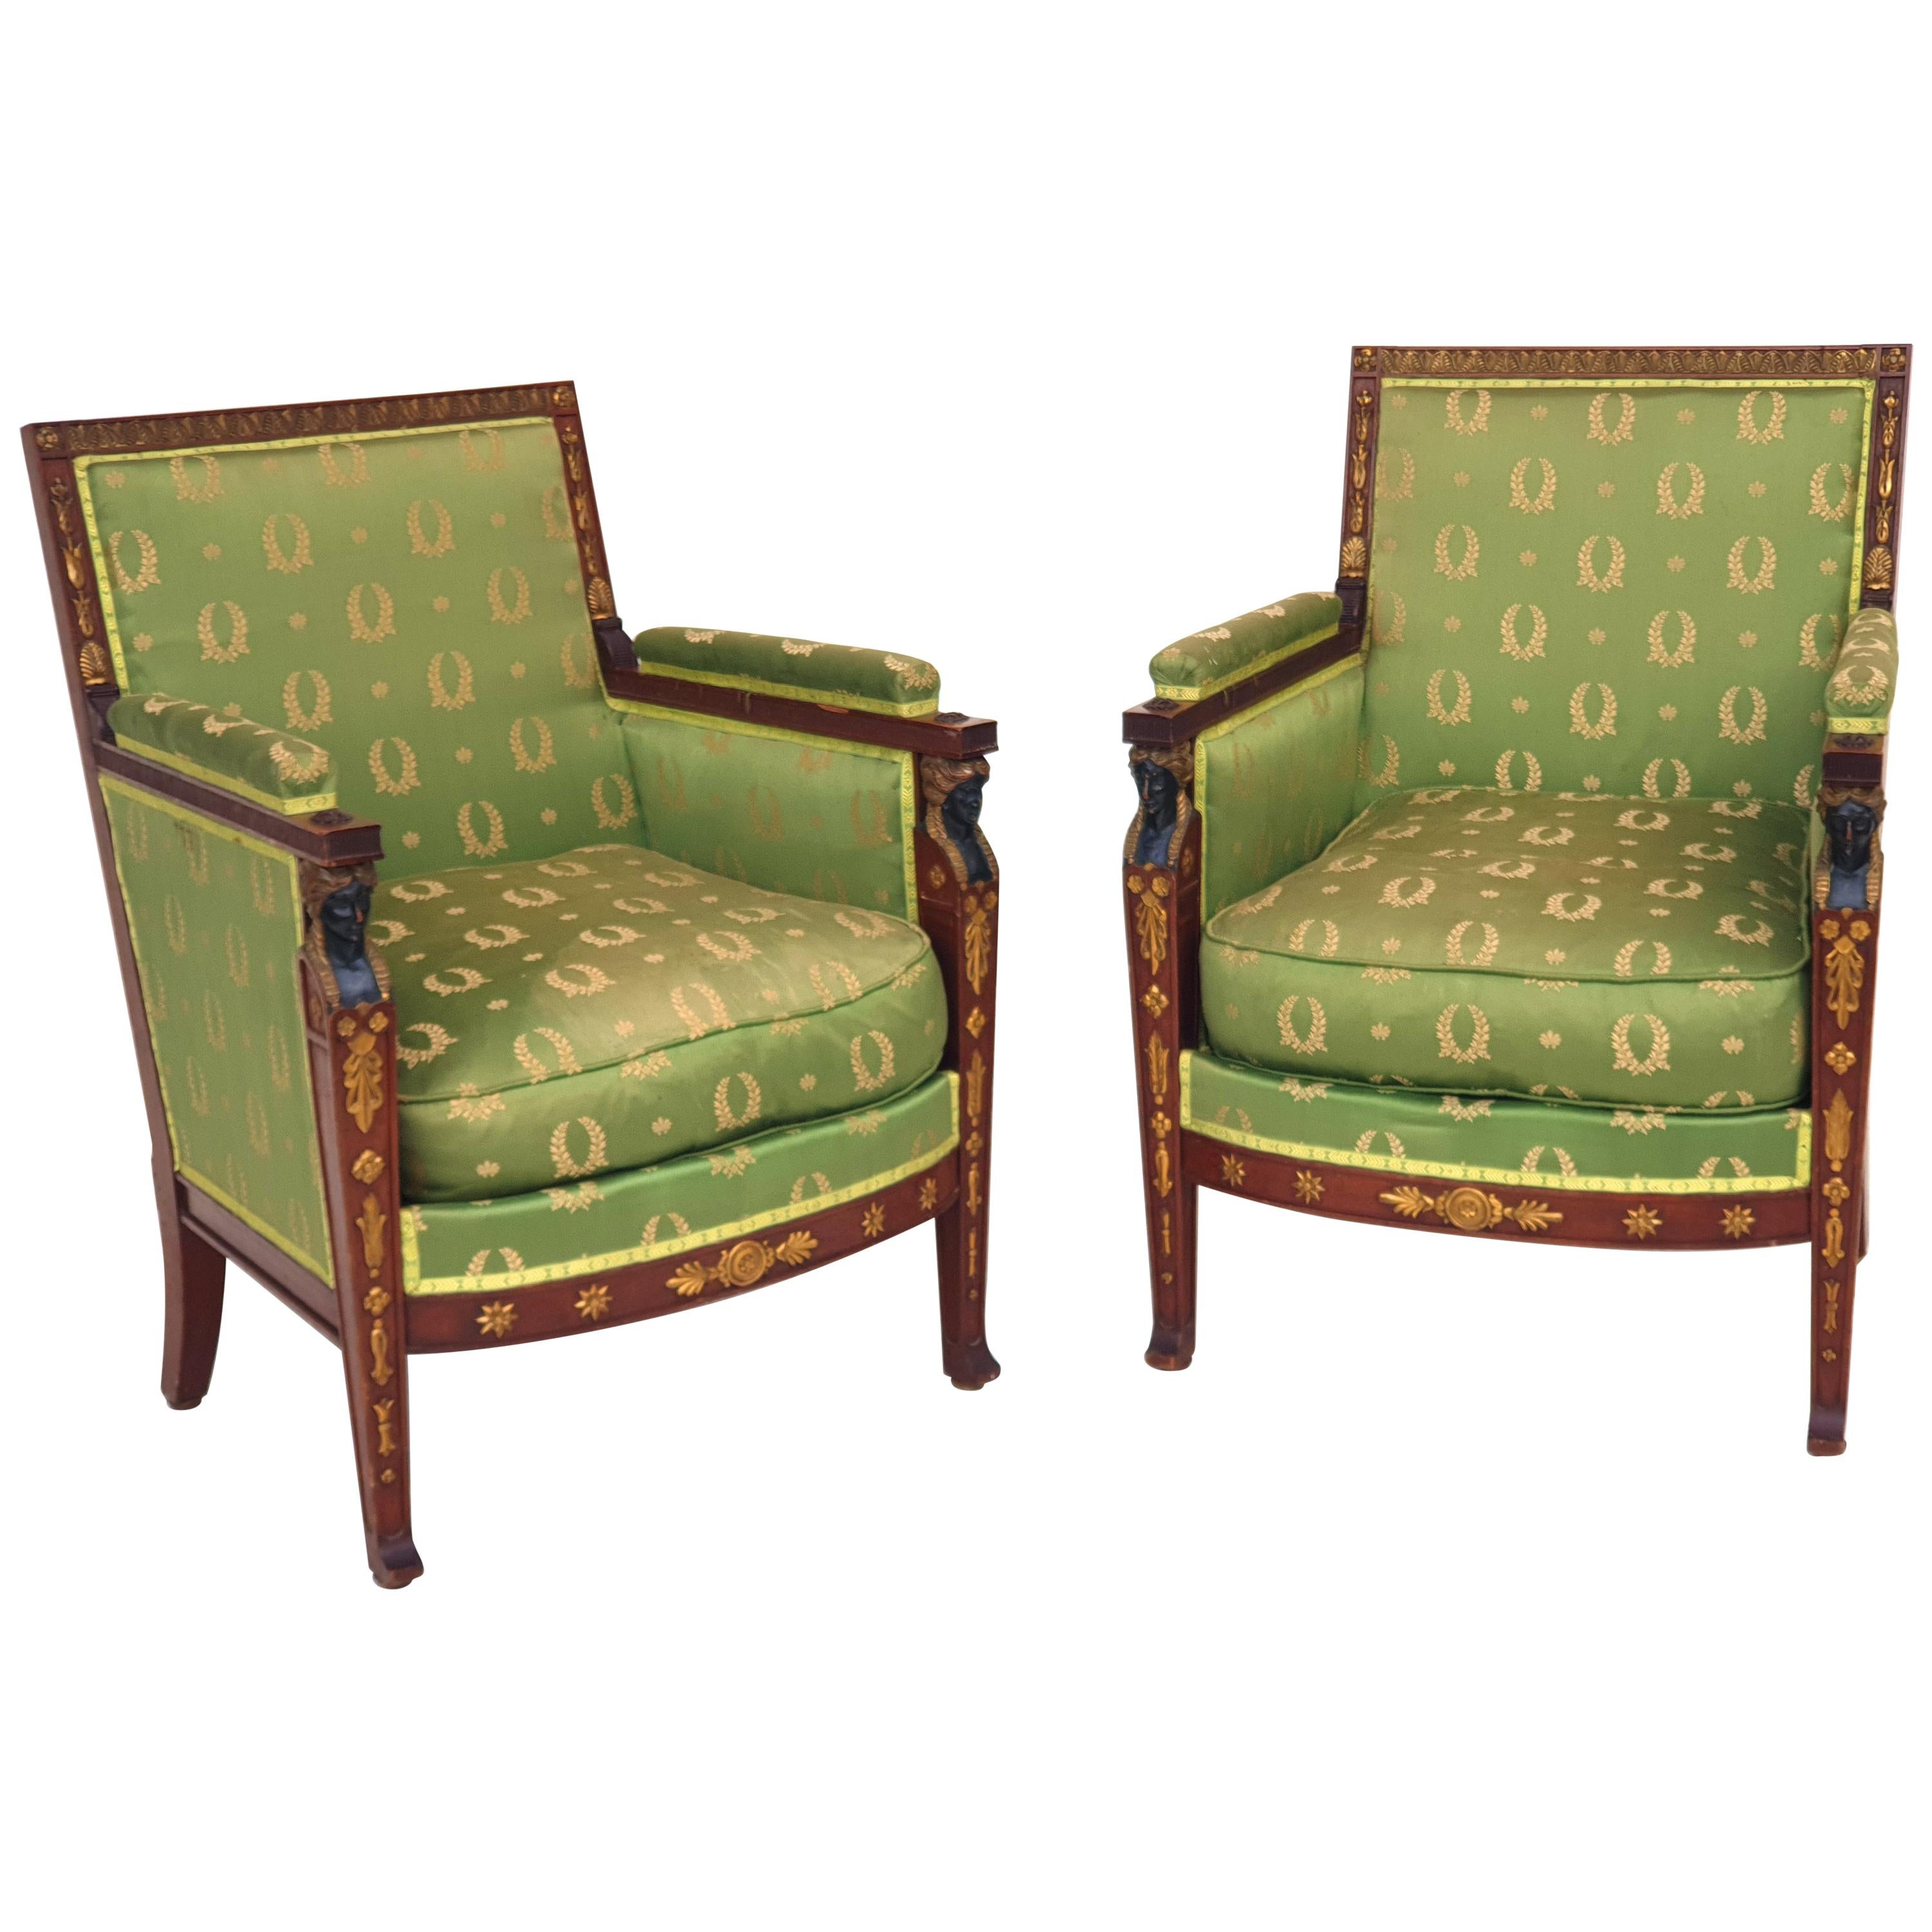 Pair of Neoclassical / Empire Armchairs, Mahogany, Paris, 1800s